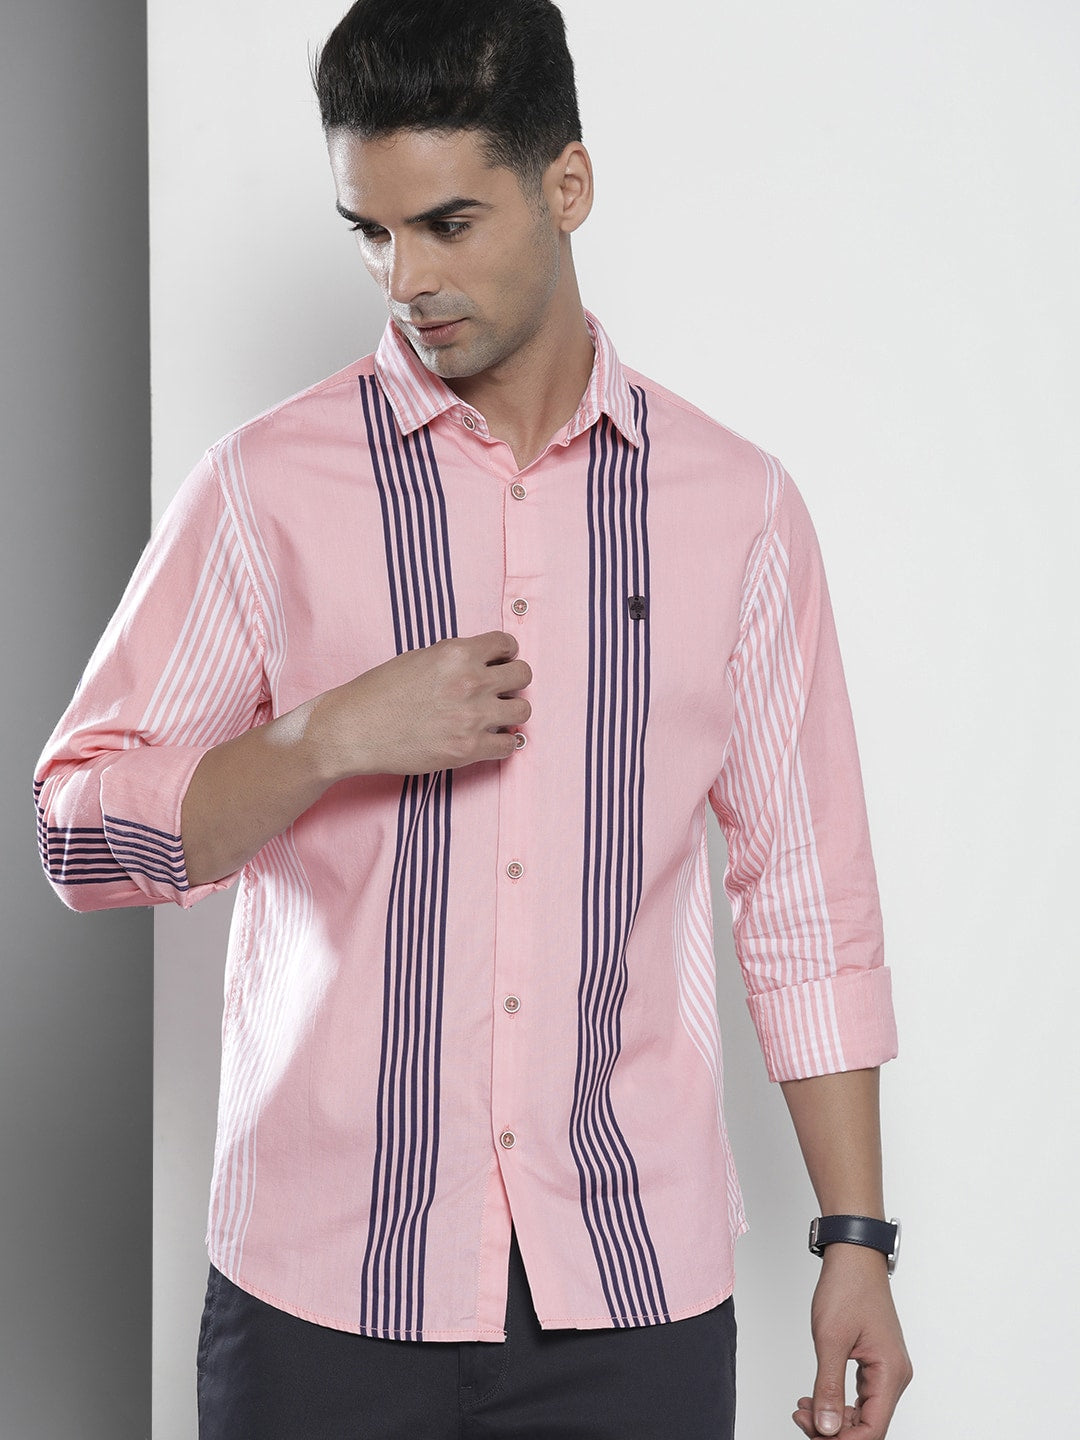 Shop Men Striped Pink Shirt Online.